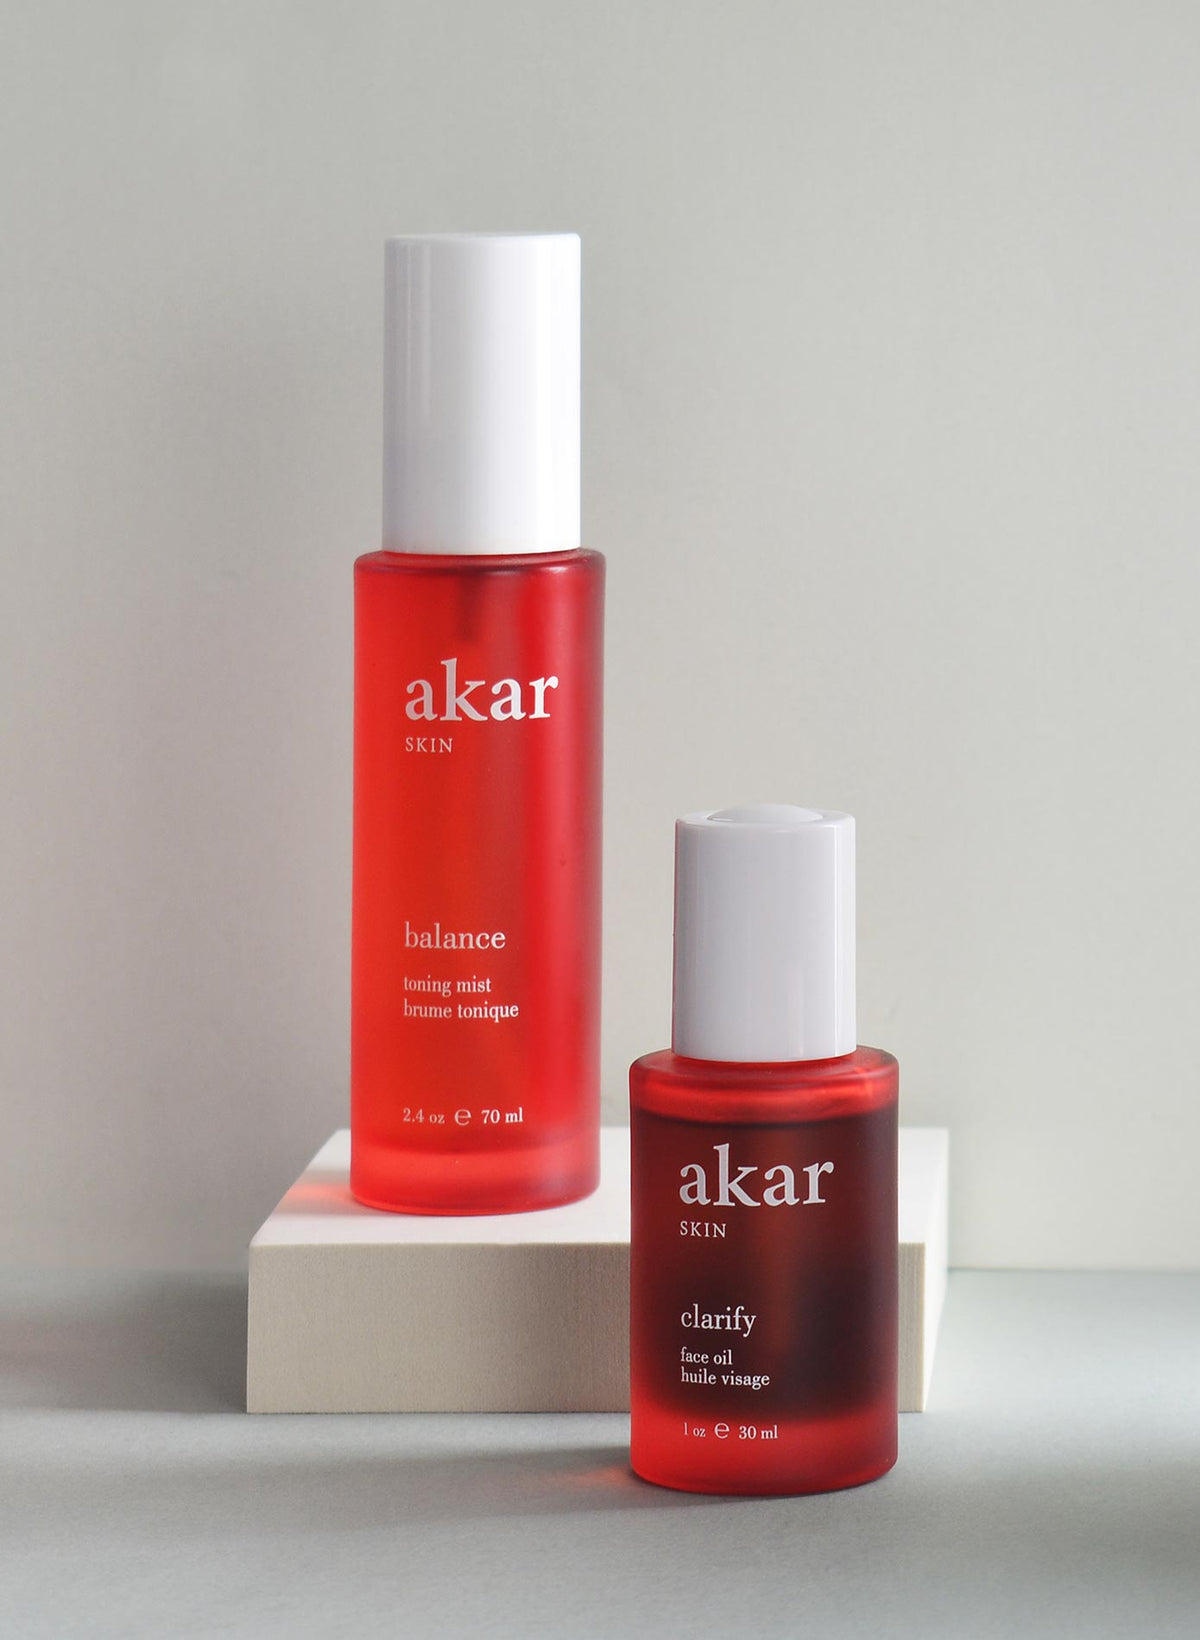 Akar Skin, Clarify Essentials, Balance Toner, Clarify Face Oil, skincare, lifestyle, photography